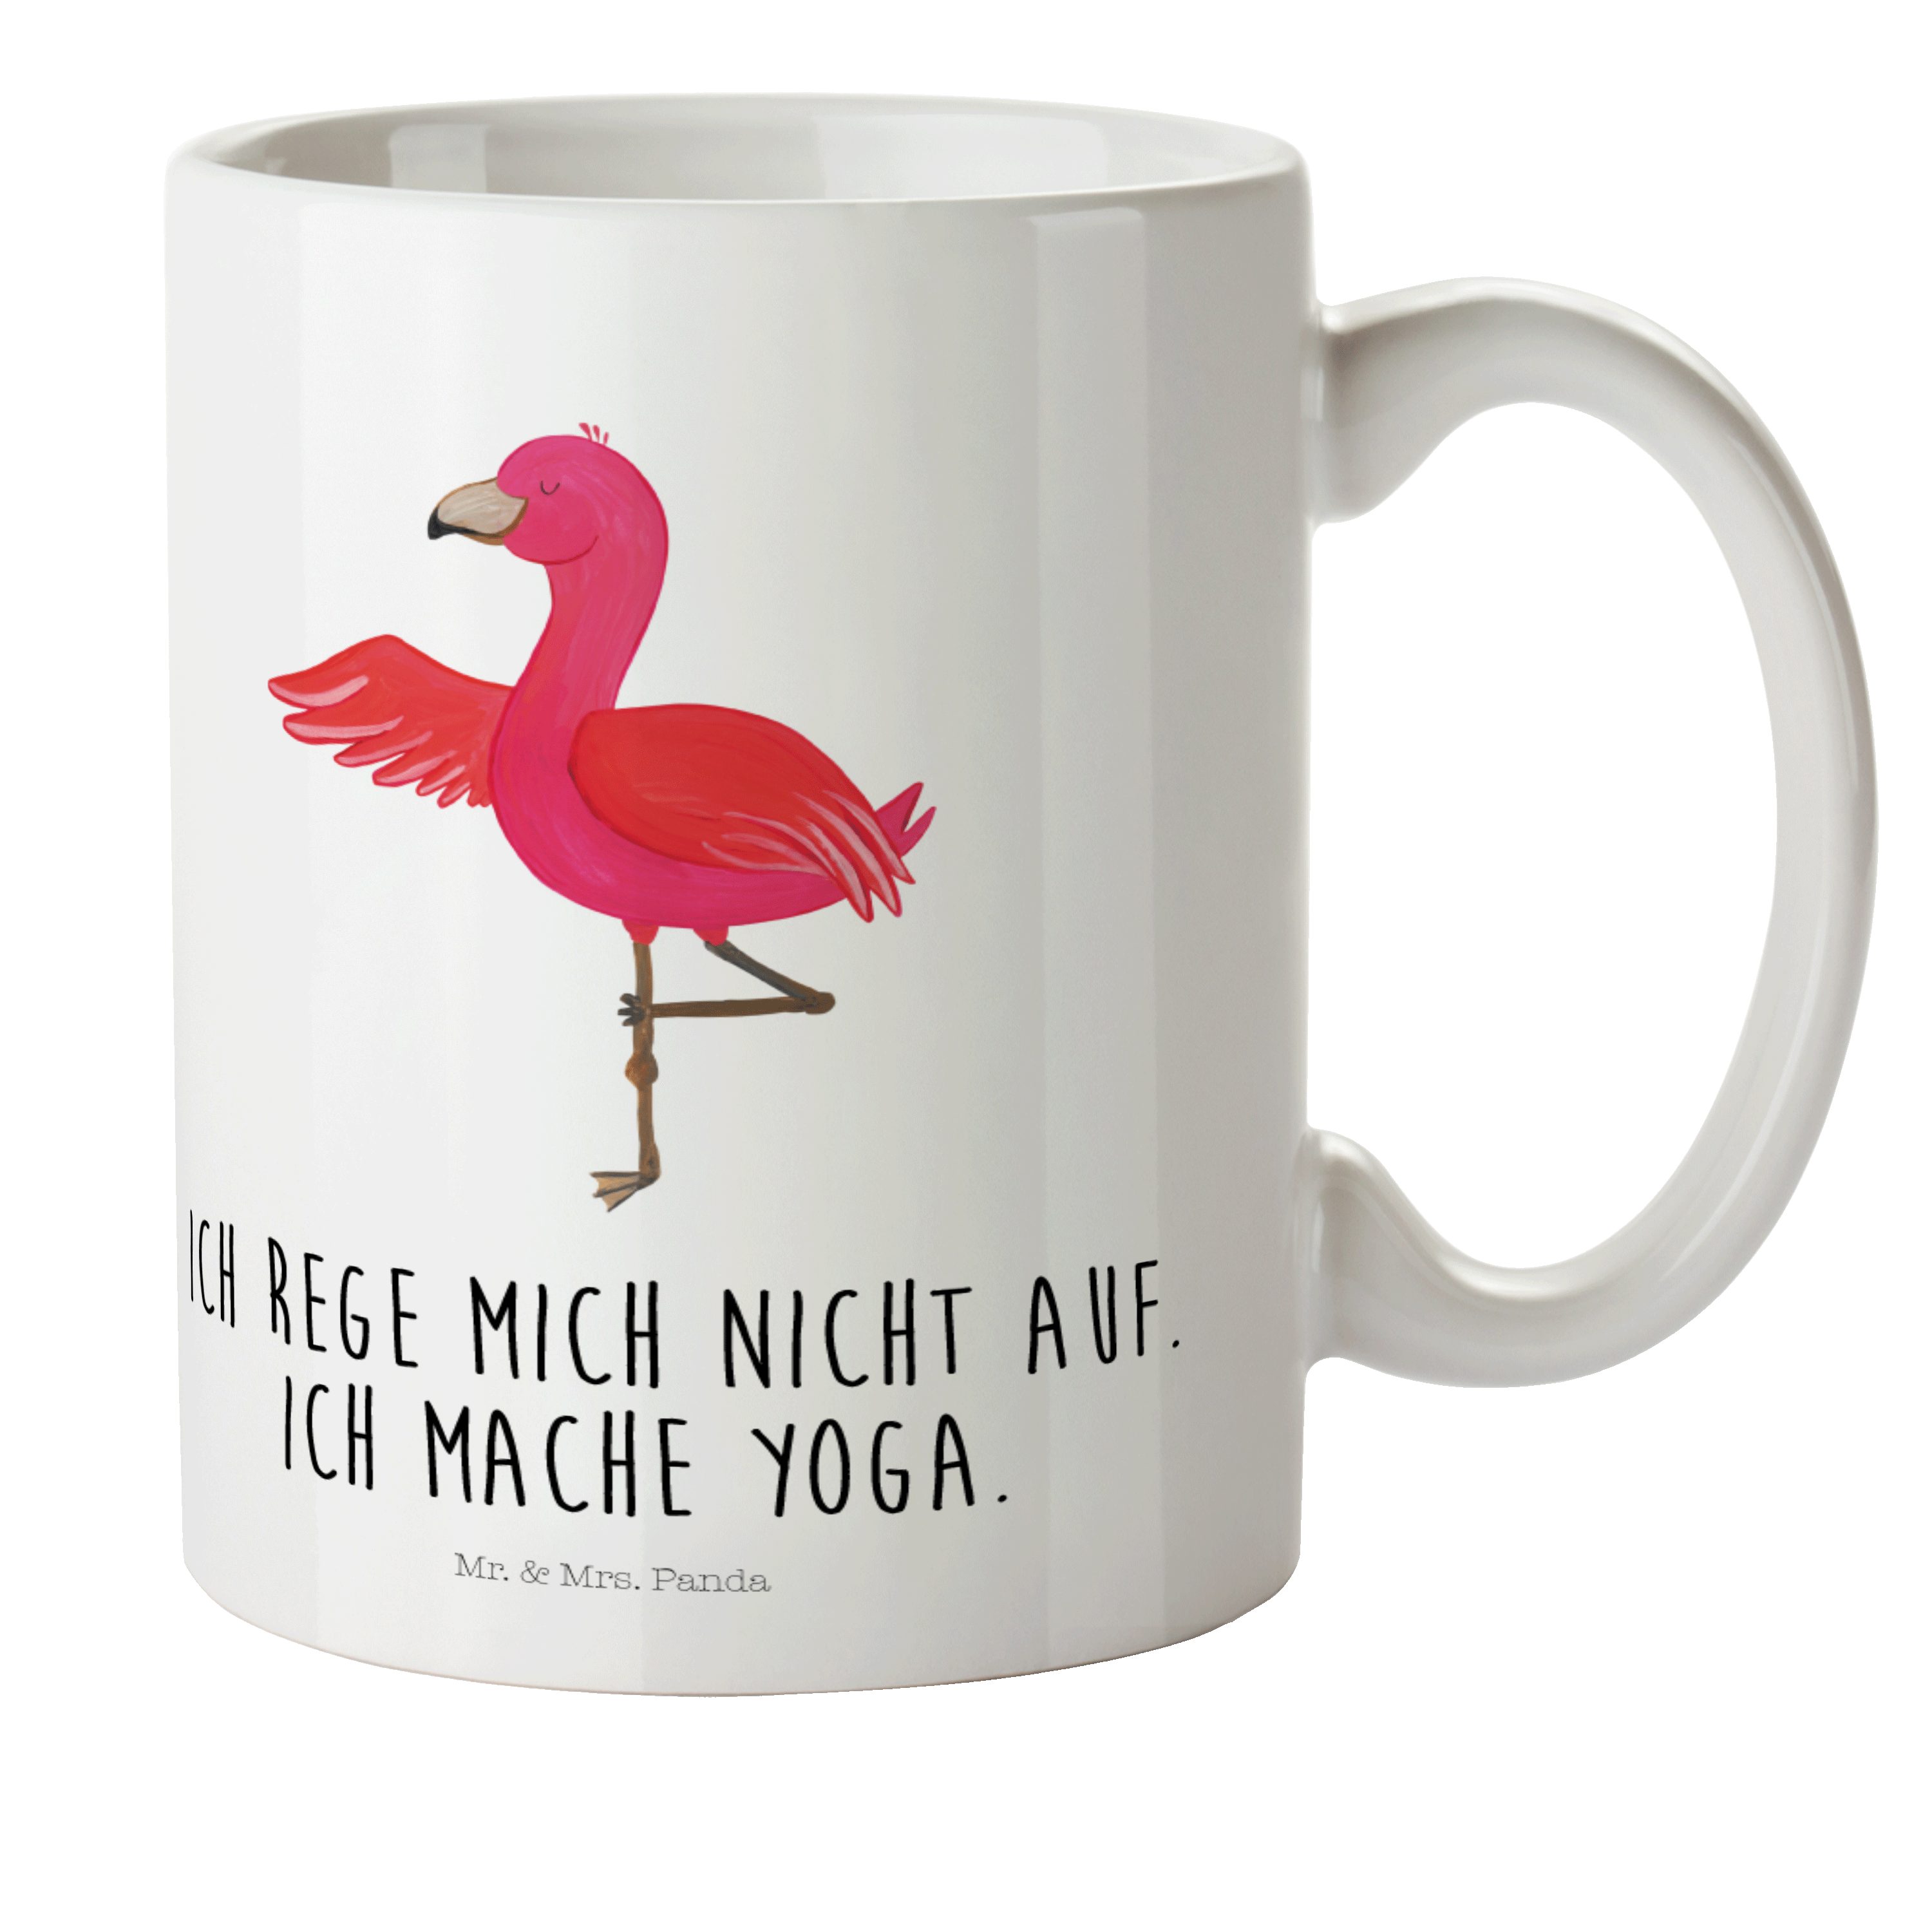 Yogapose, Panda Weiß Flamingo Kindergarten, Geschenk, - Kinderbecher Kunststoff & Namaste, Mrs. Mr. - Tri, Yoga